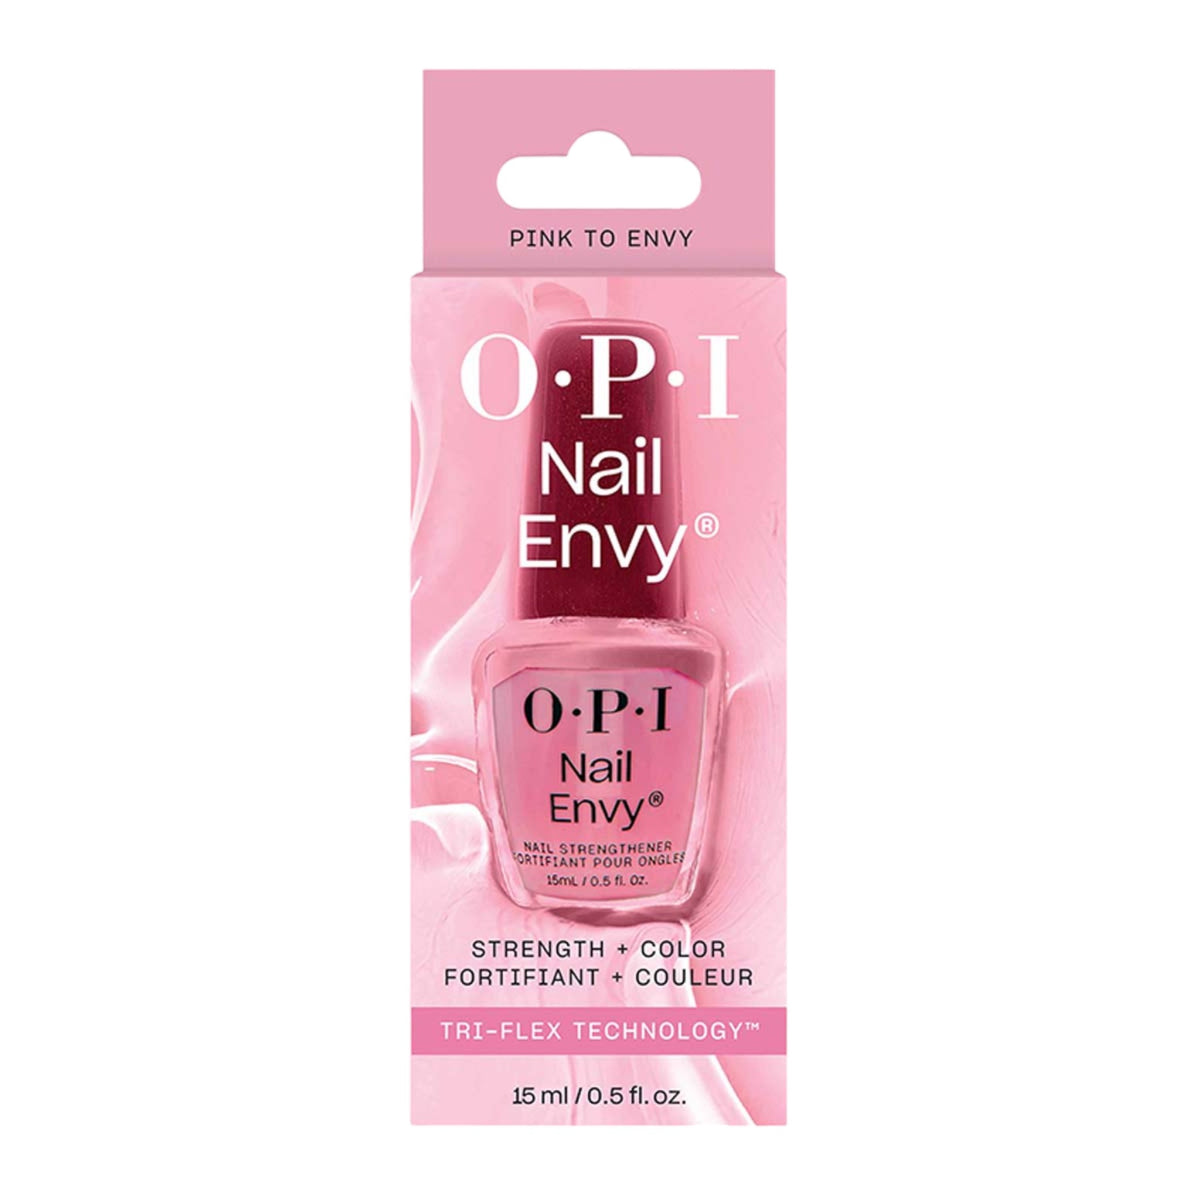 OPI Nail Envy Pink To Envy Strengthener 15ml